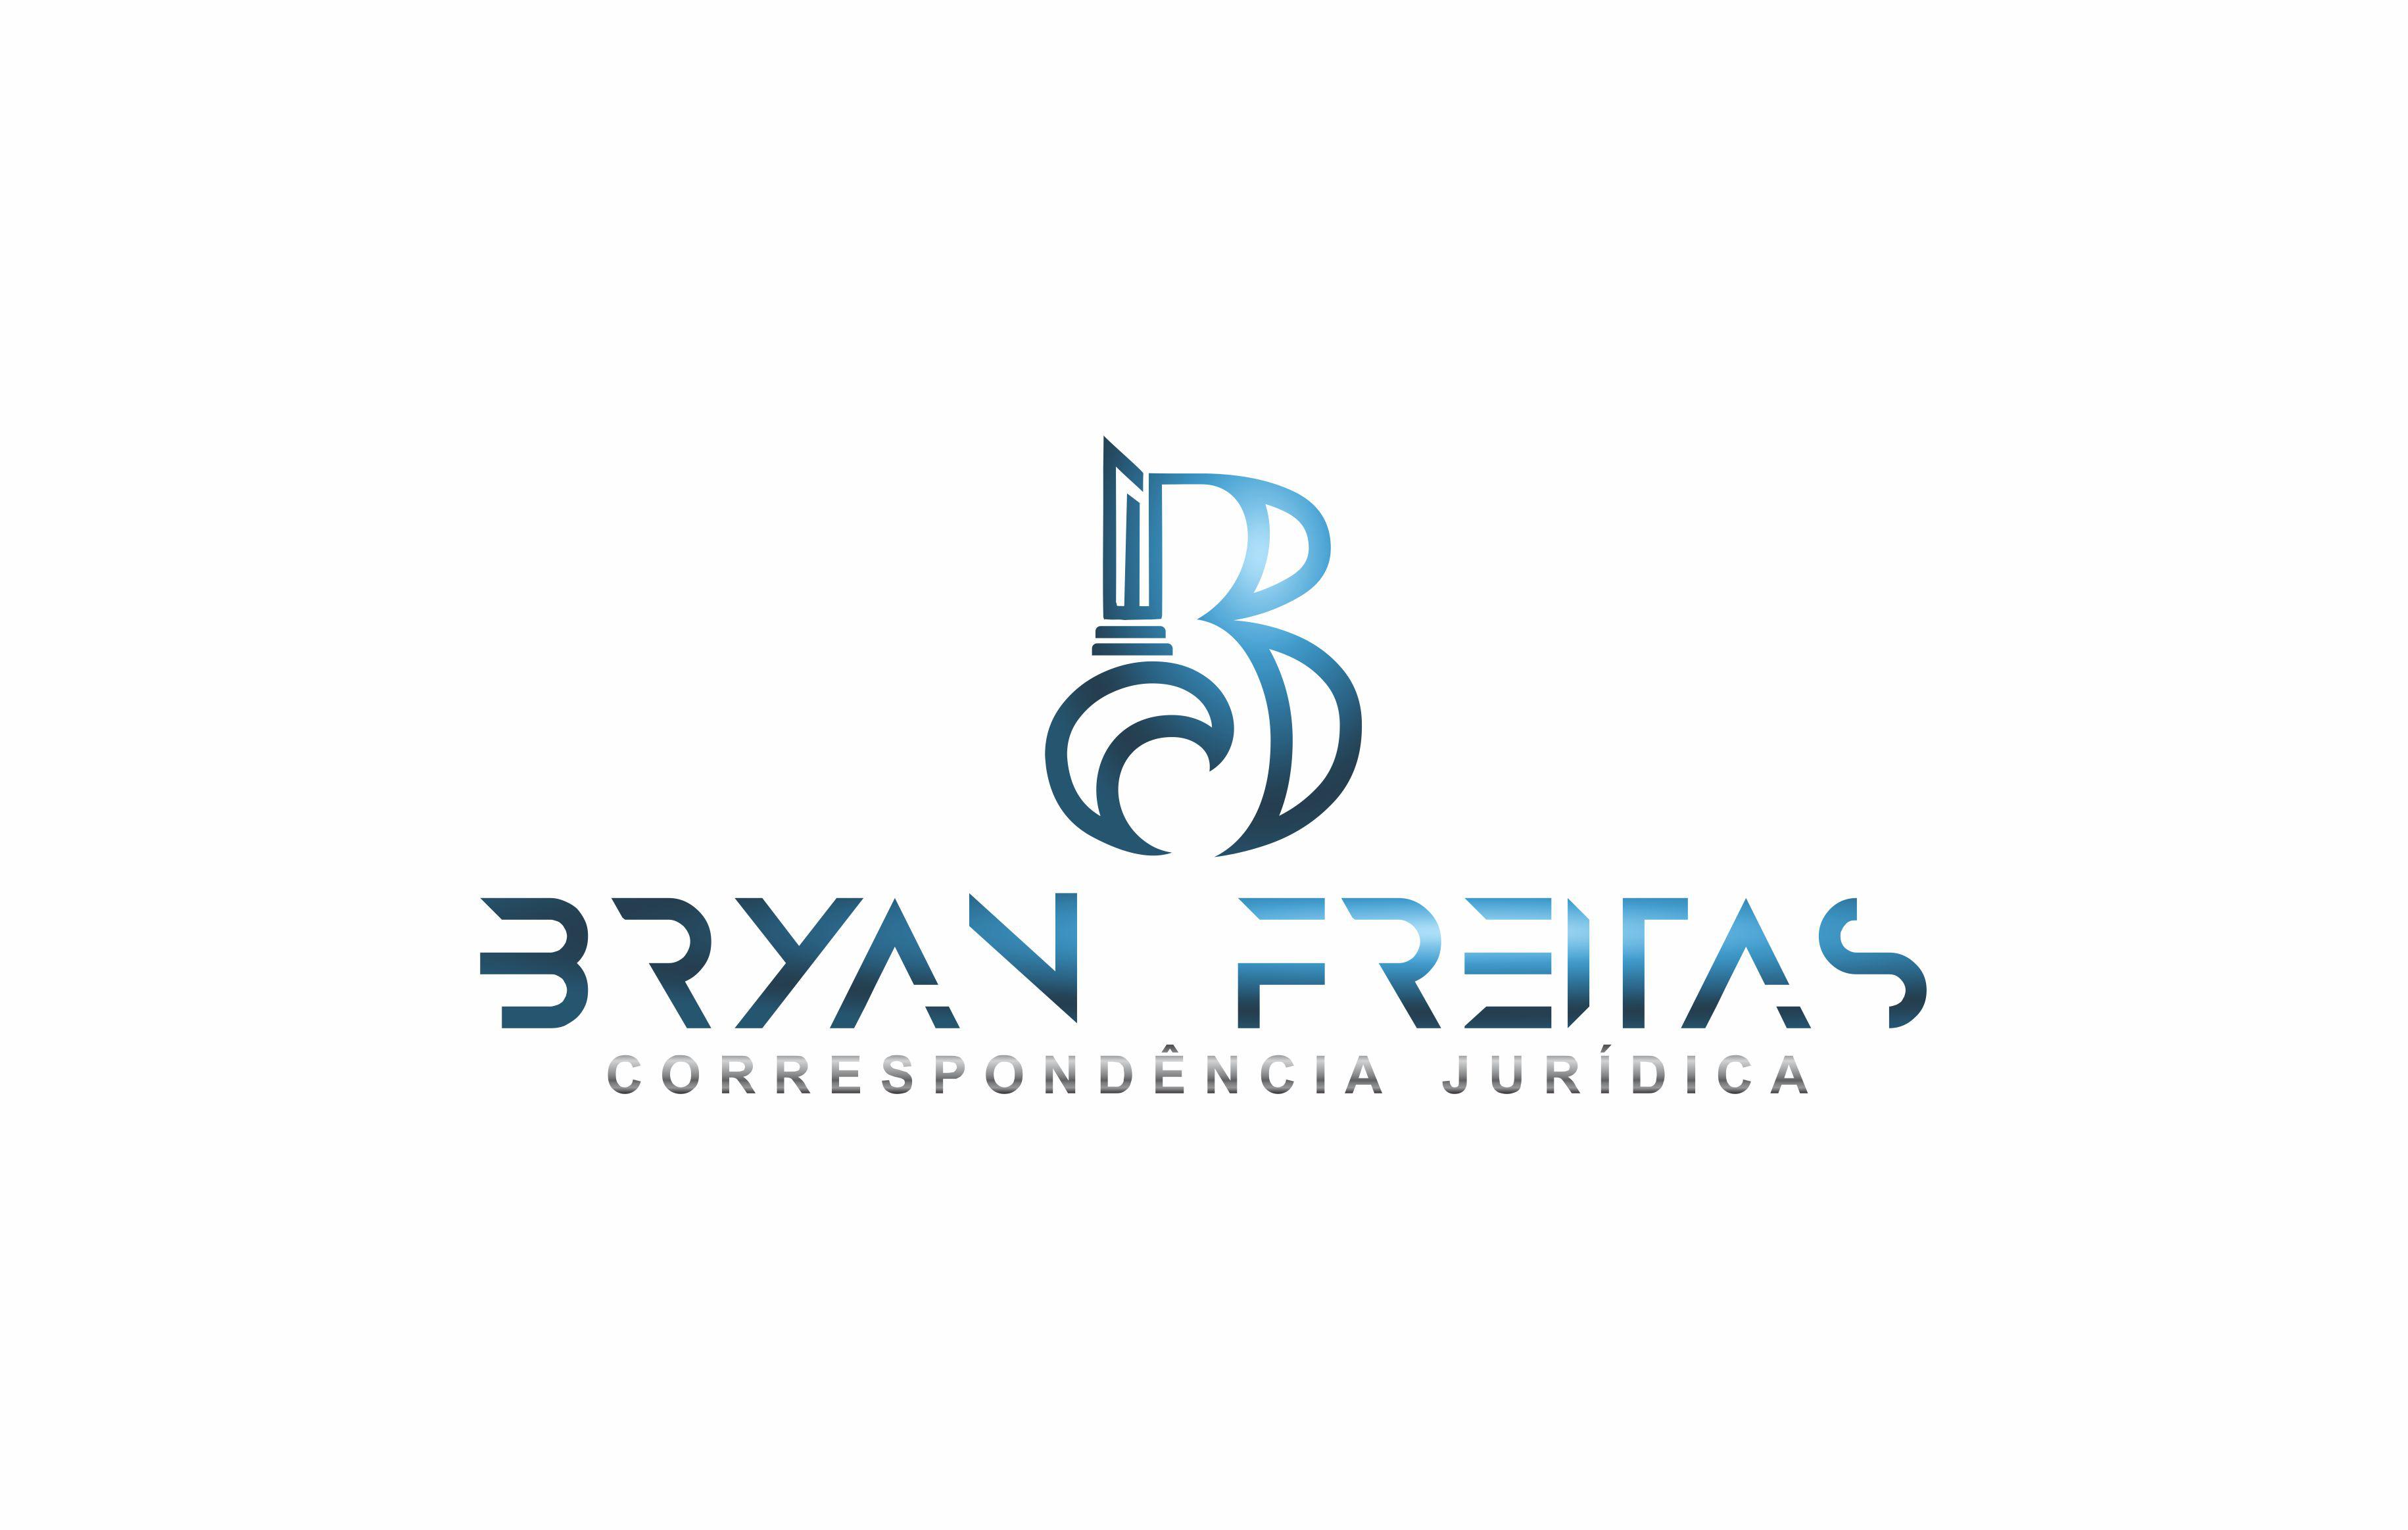 Bryan Freitas - Correspondência Jurídica Logo